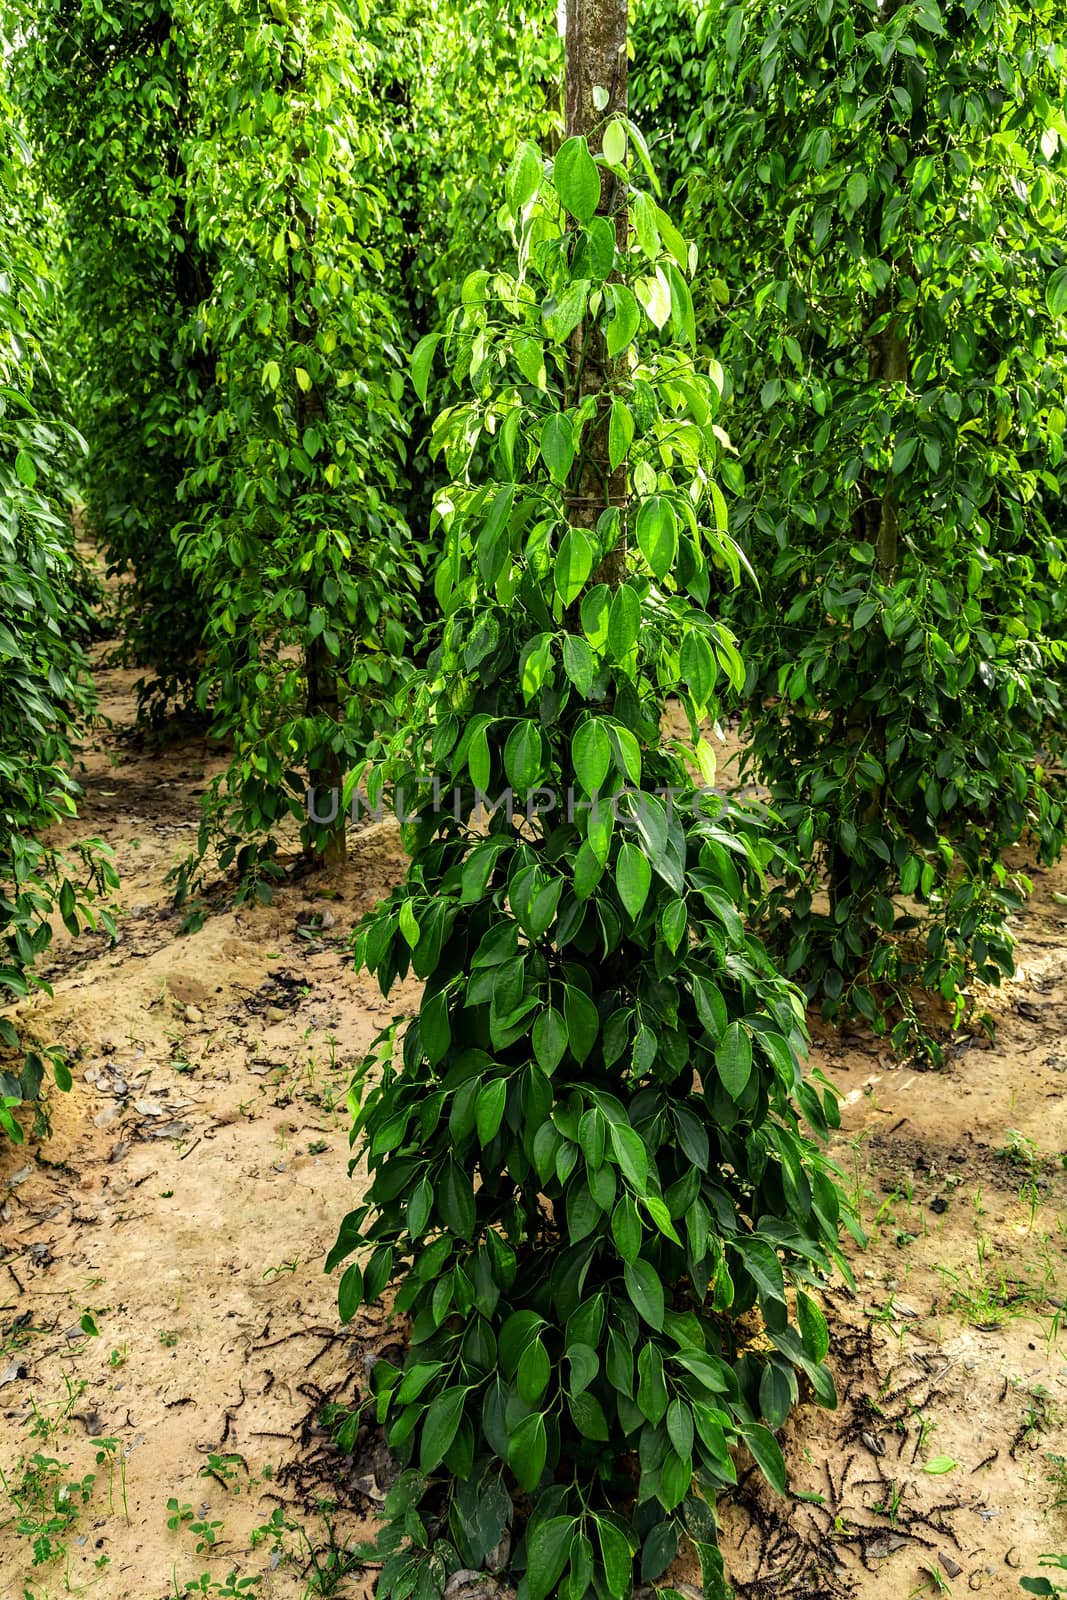 Black pepper bush juicy fresh green leaves glow plant in Sri Lanka